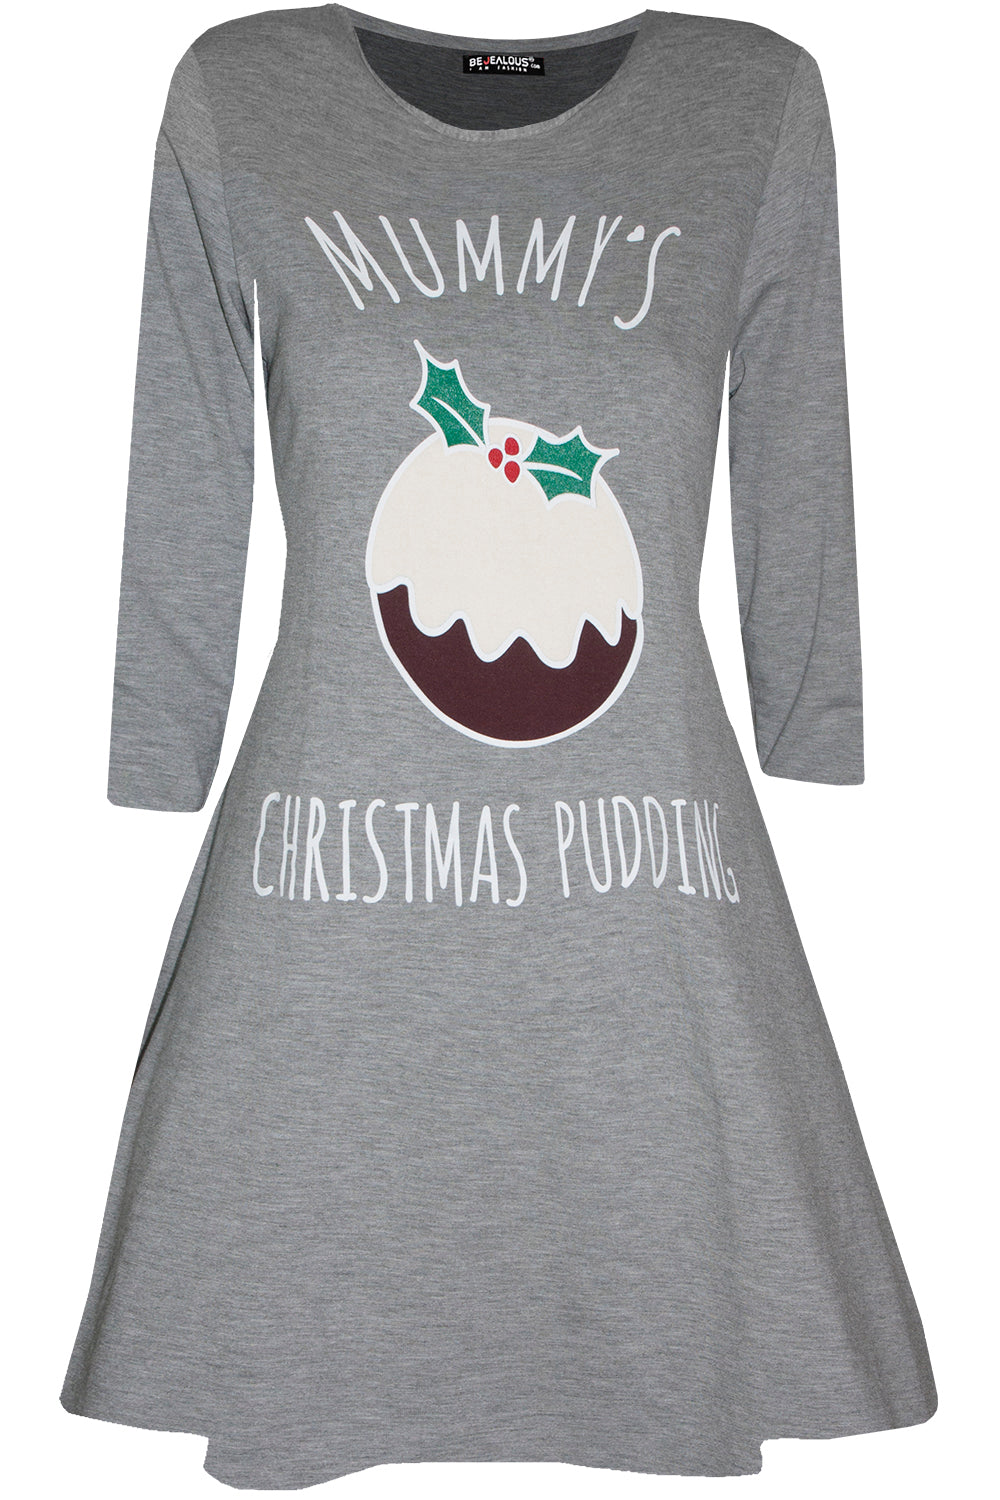 Mummy's Christmas Pudding Maternity Dress - bejealous-com